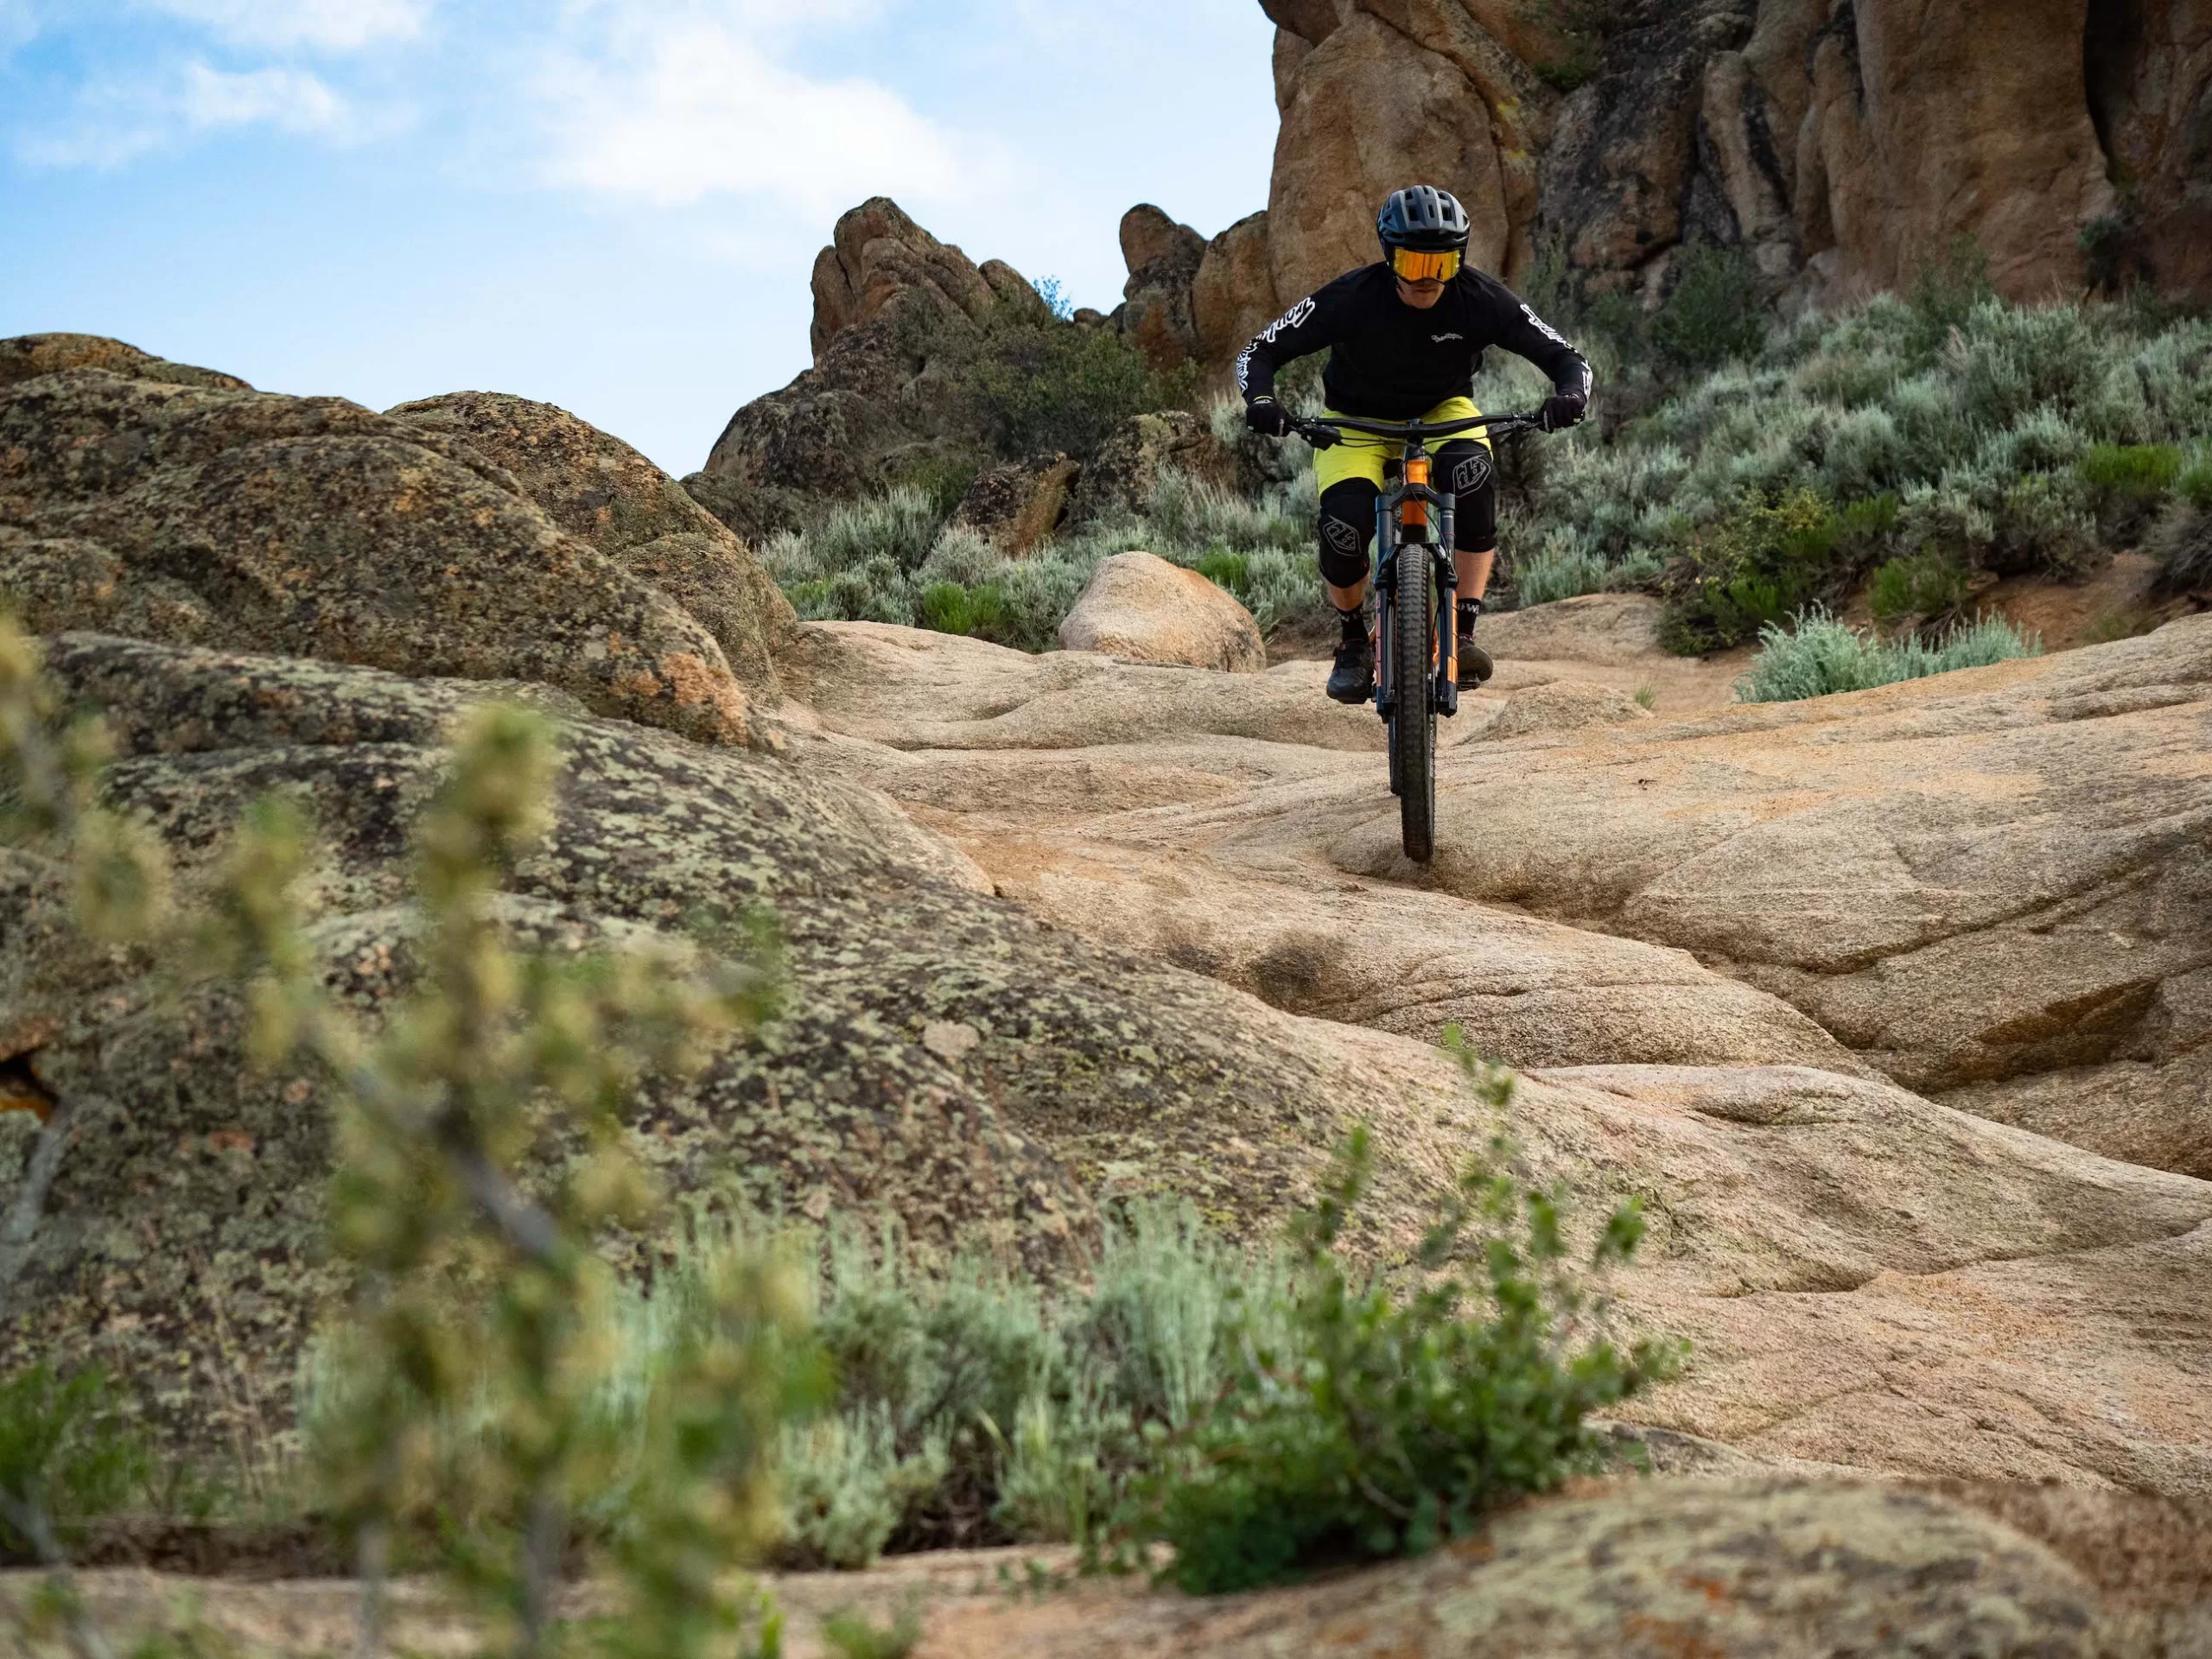 A man rides a mountain bike on a dirt trail